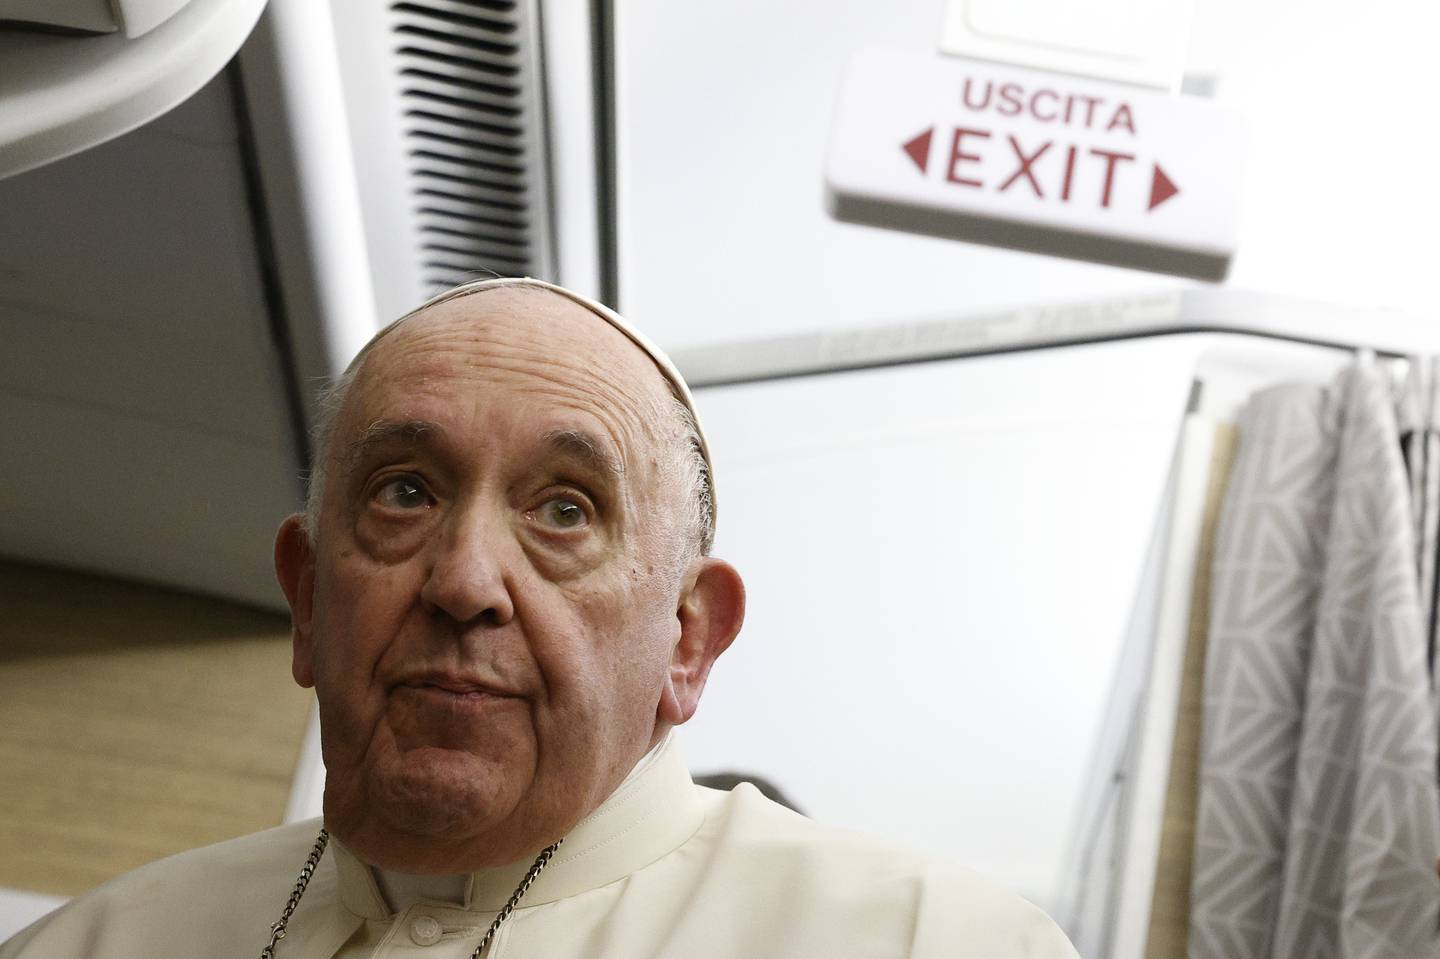 Pave Frans om bord på flyet tilbake til Canada. Foto: Guglielmo Mangiapane / Pool via AP / NTB